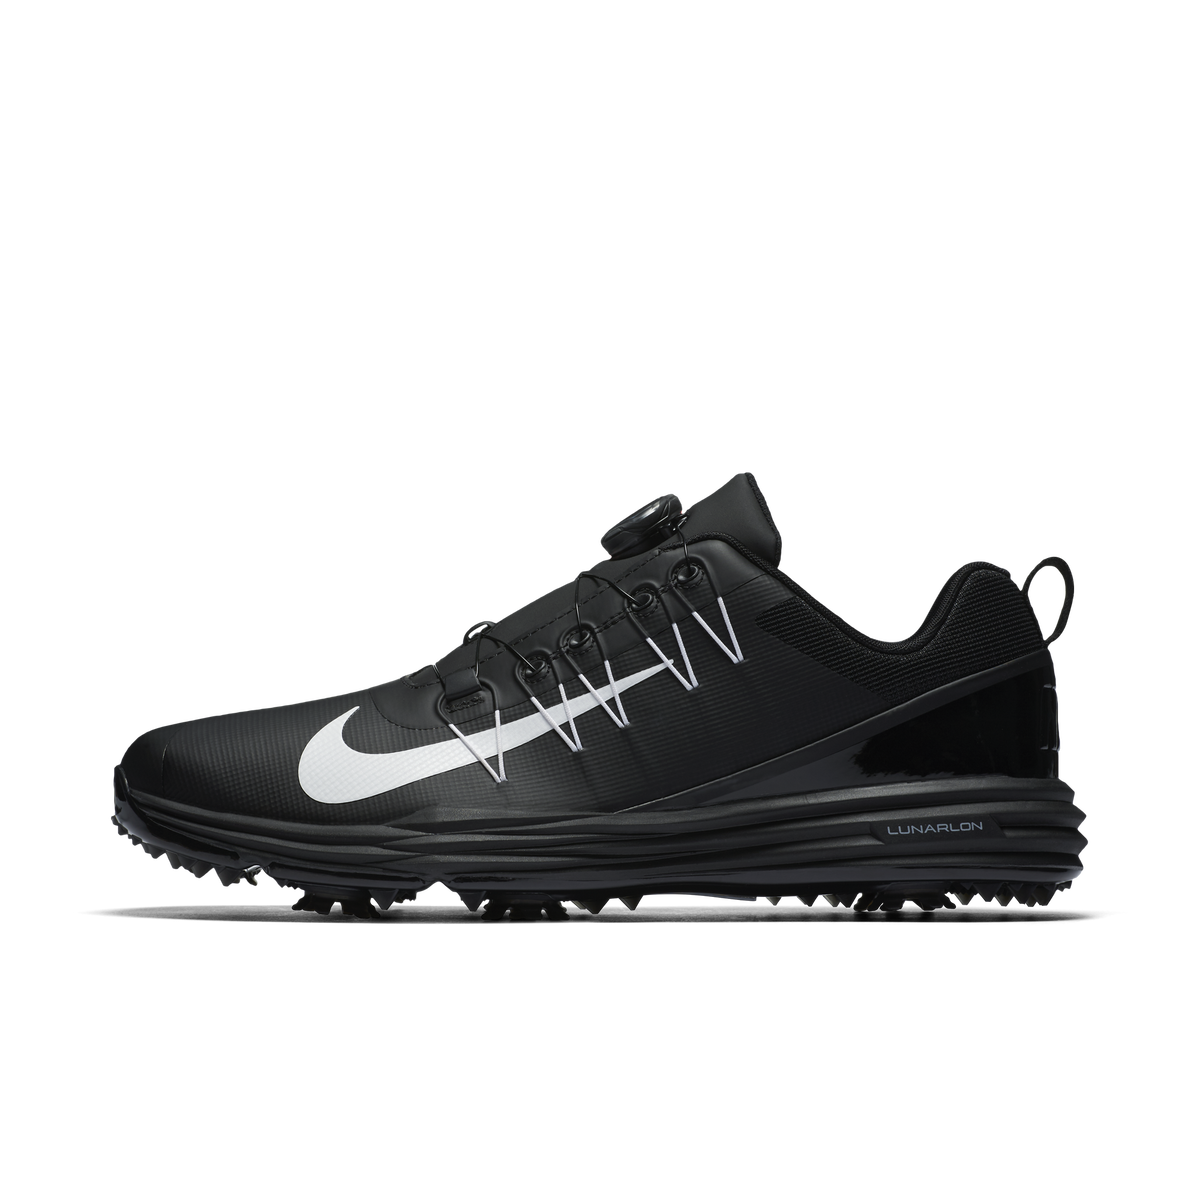 Nike Lunar Command 2 Men's Golf Shoe - Black/White | PGA TOUR Superstore